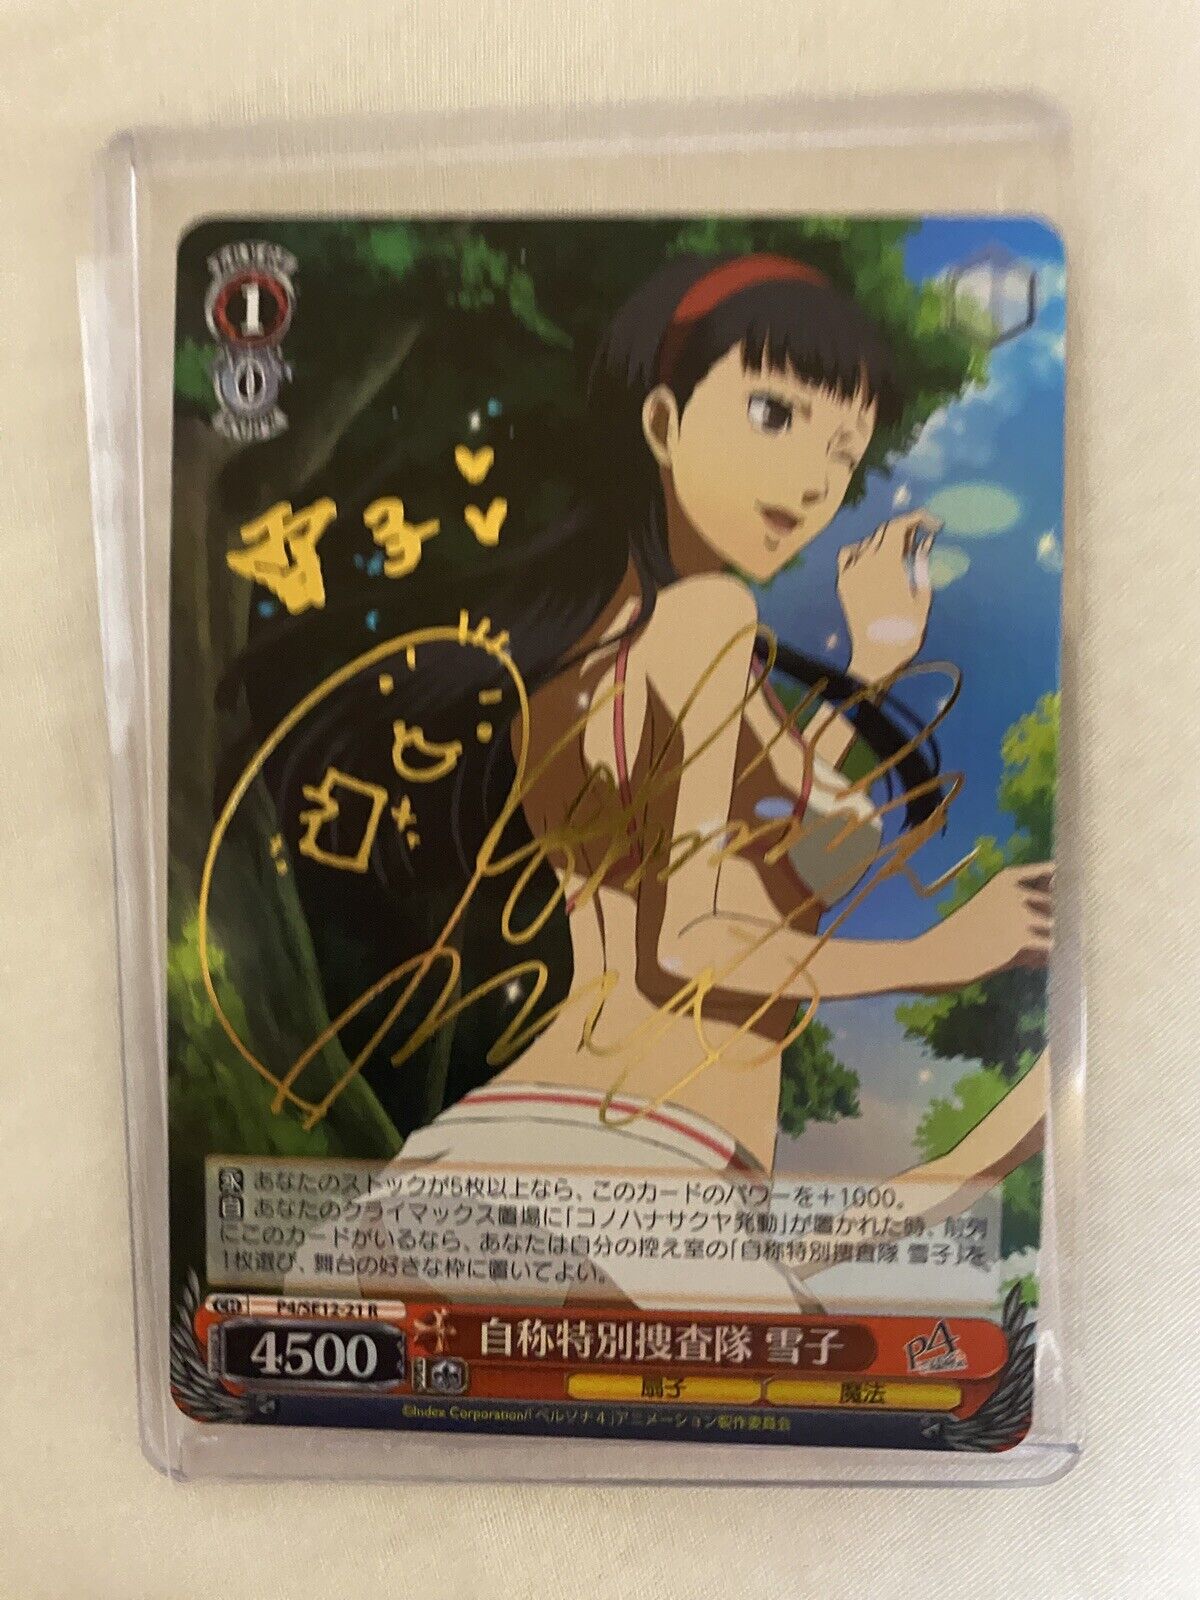 Persona 4 Trading Card Weiss Schwarz CH P4/SE12-21 R SIGNED FOIL Yukiko Amagi